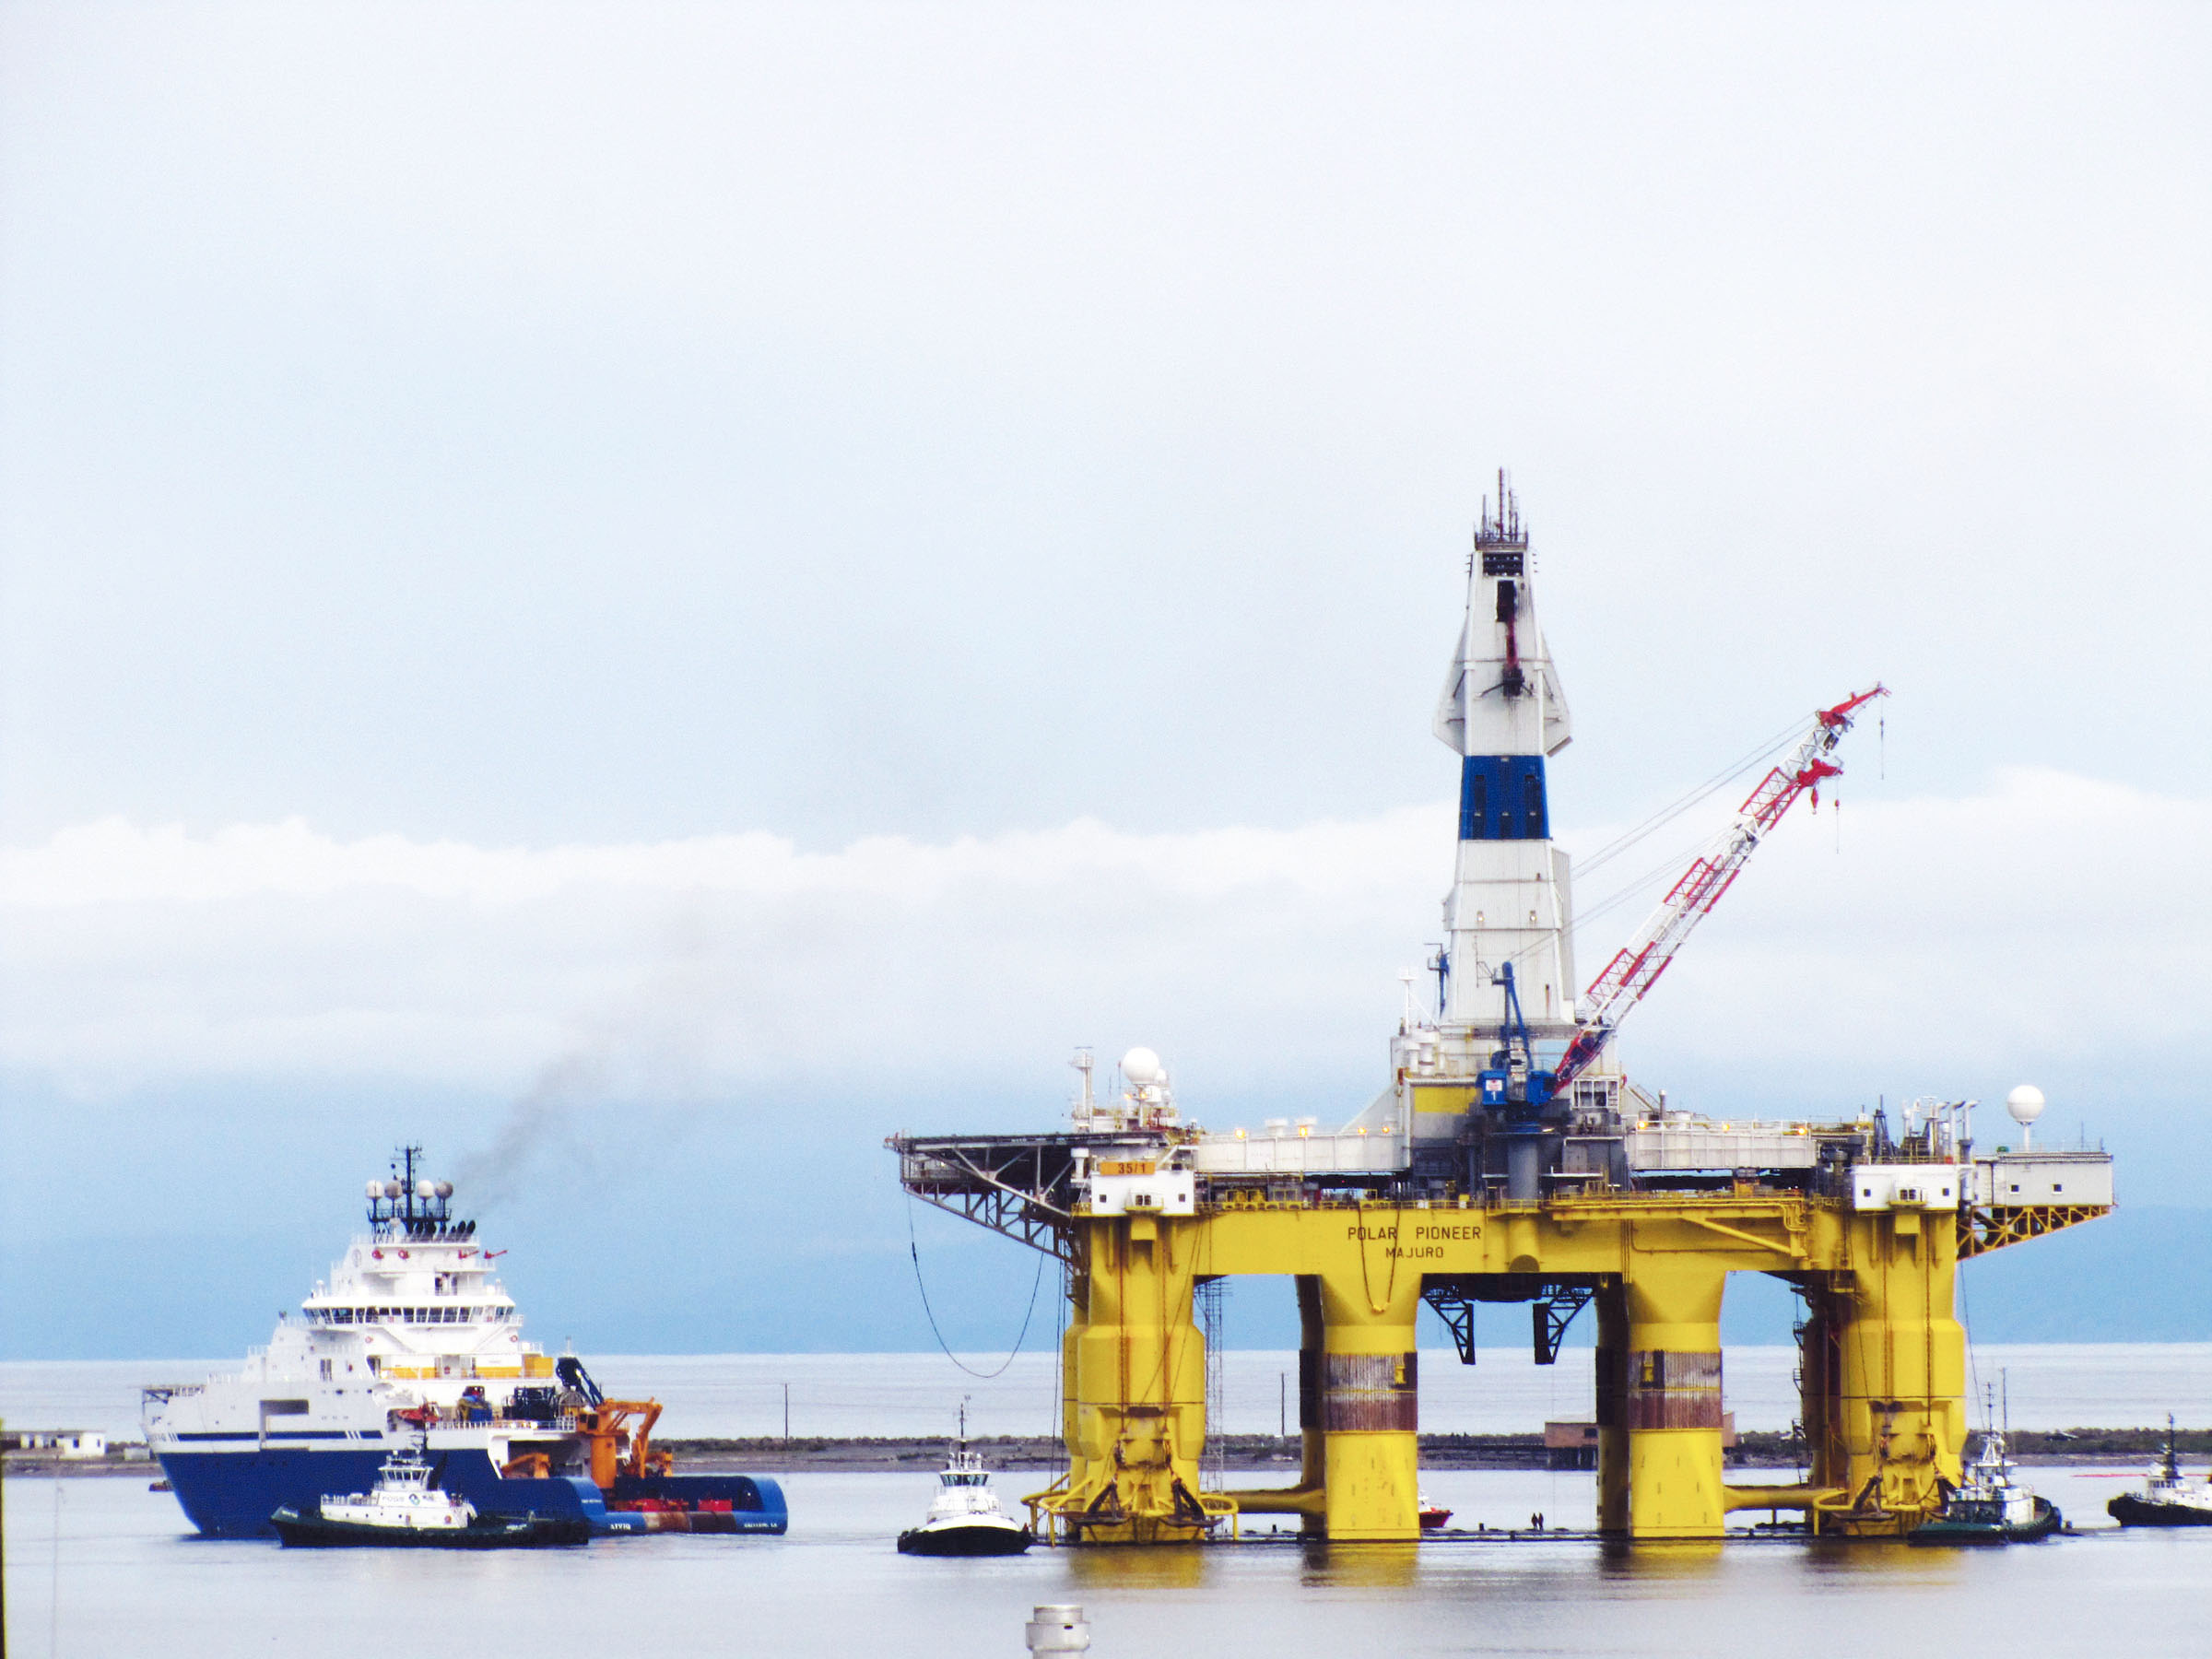 The Arctic offshore oil rig Polar Pioneer